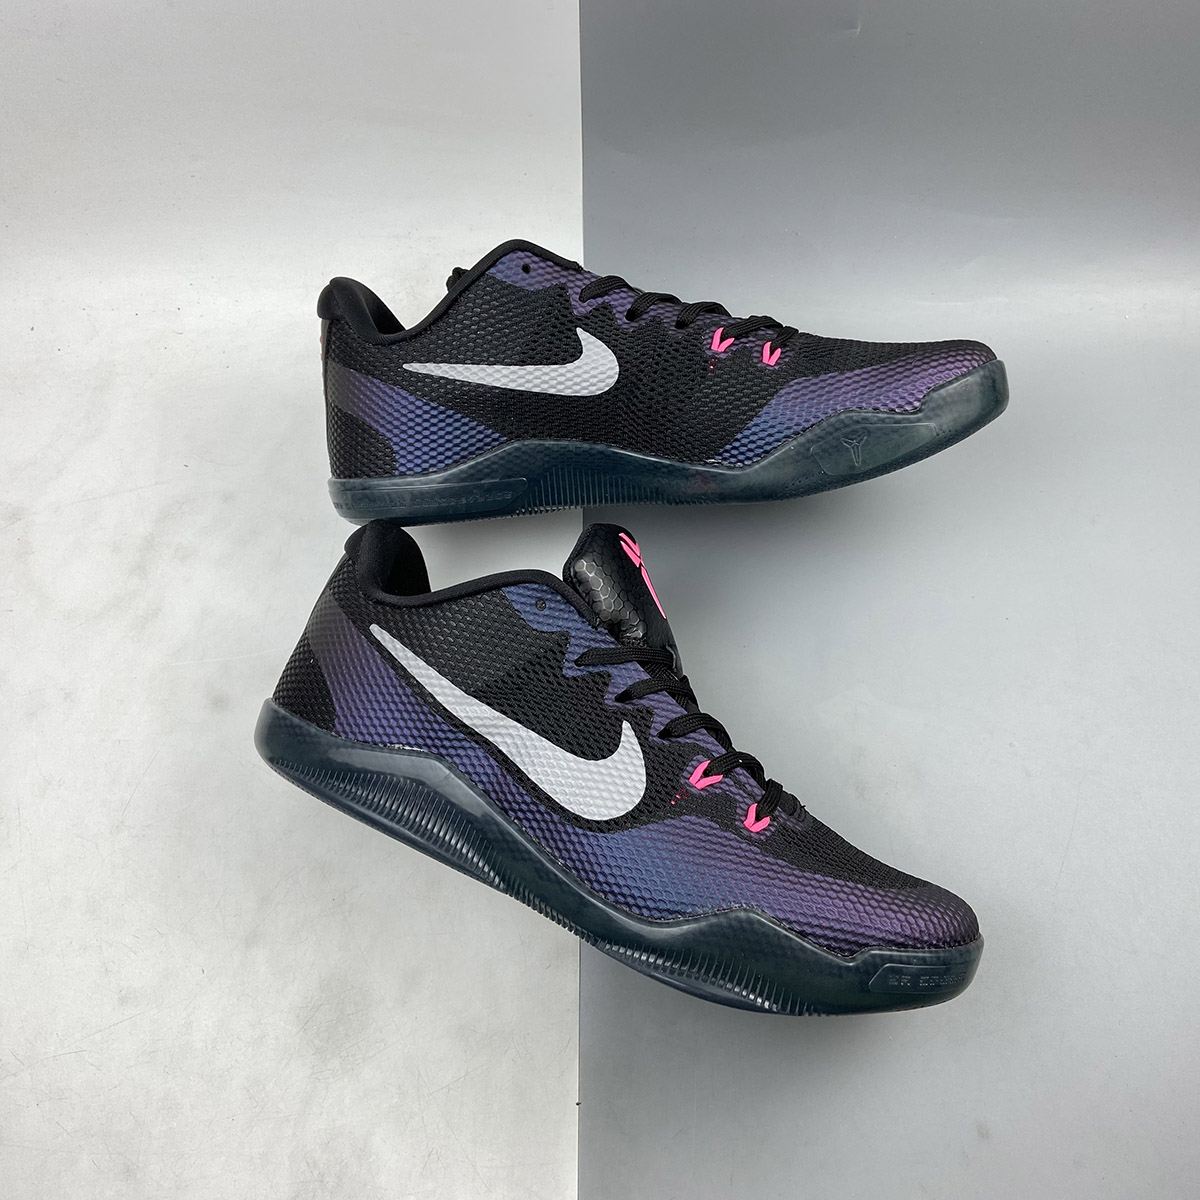 Nike Kobe 11 Low ‘Invisibility Cloak’ Black/Hyper Pink-Metallic Silver ...